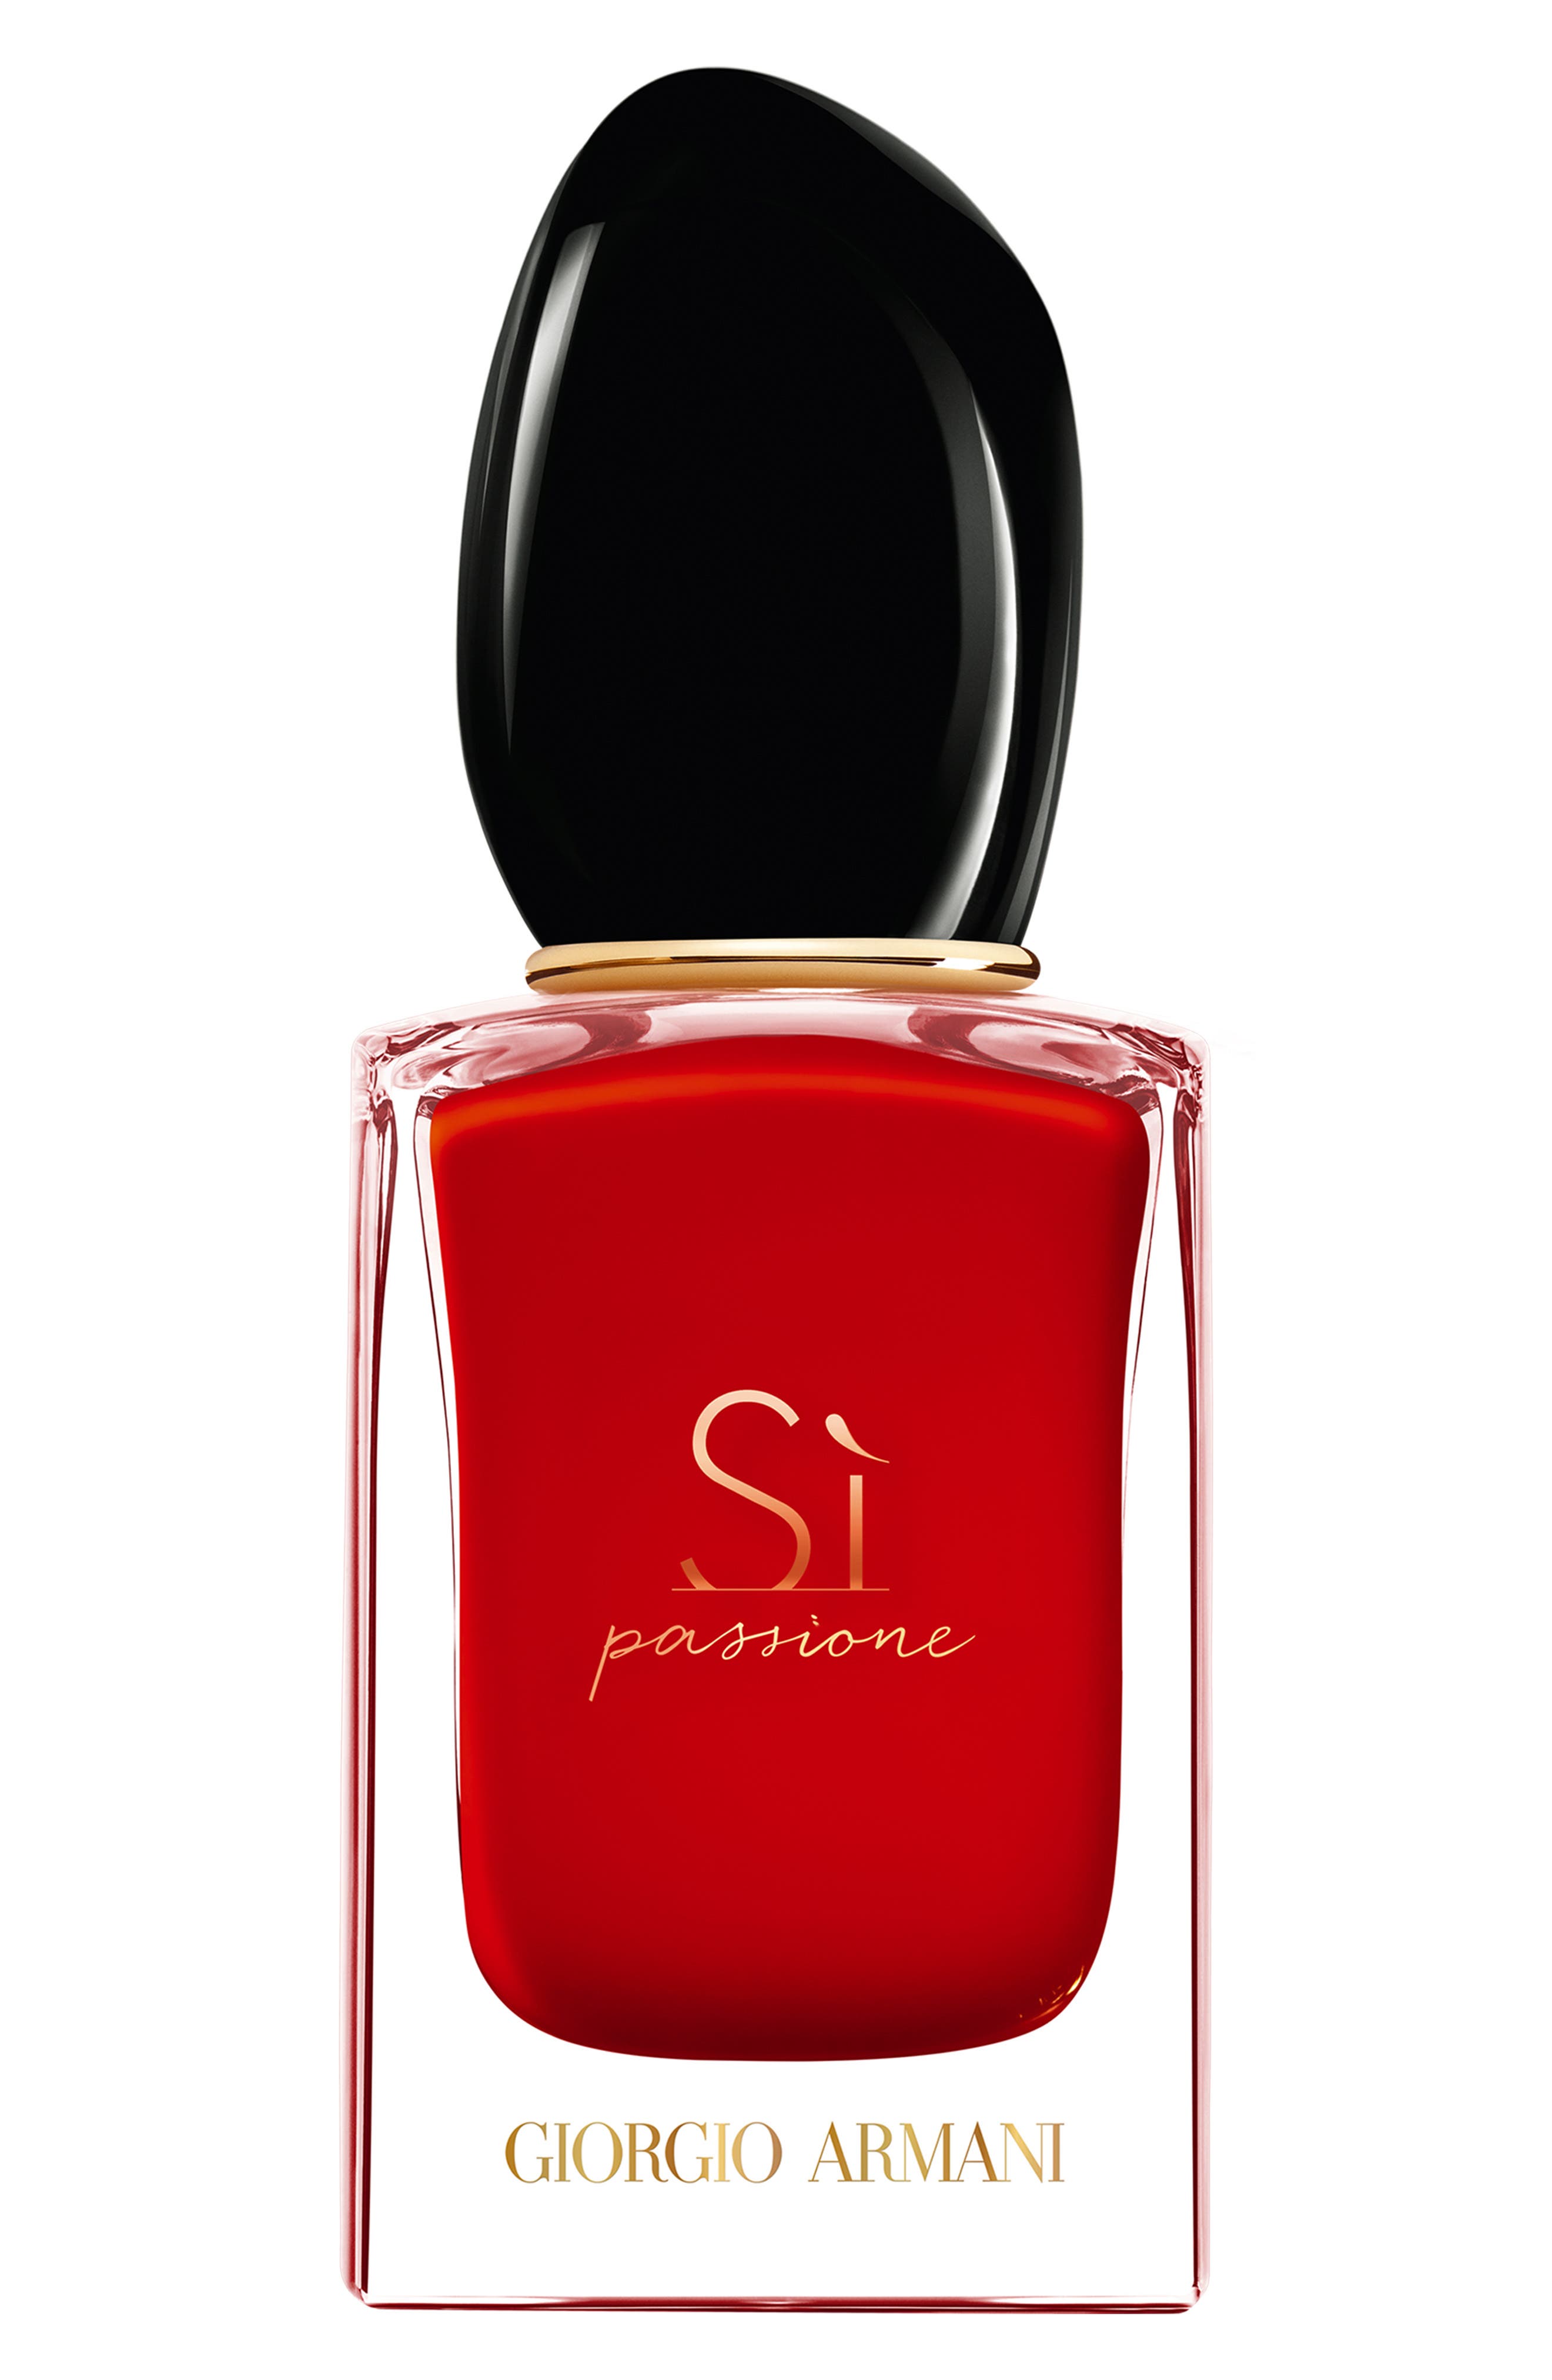 Giorgio Armani Si Passione Eau de Parfum Fragrance at Nordstrom, Size 1.7 Oz